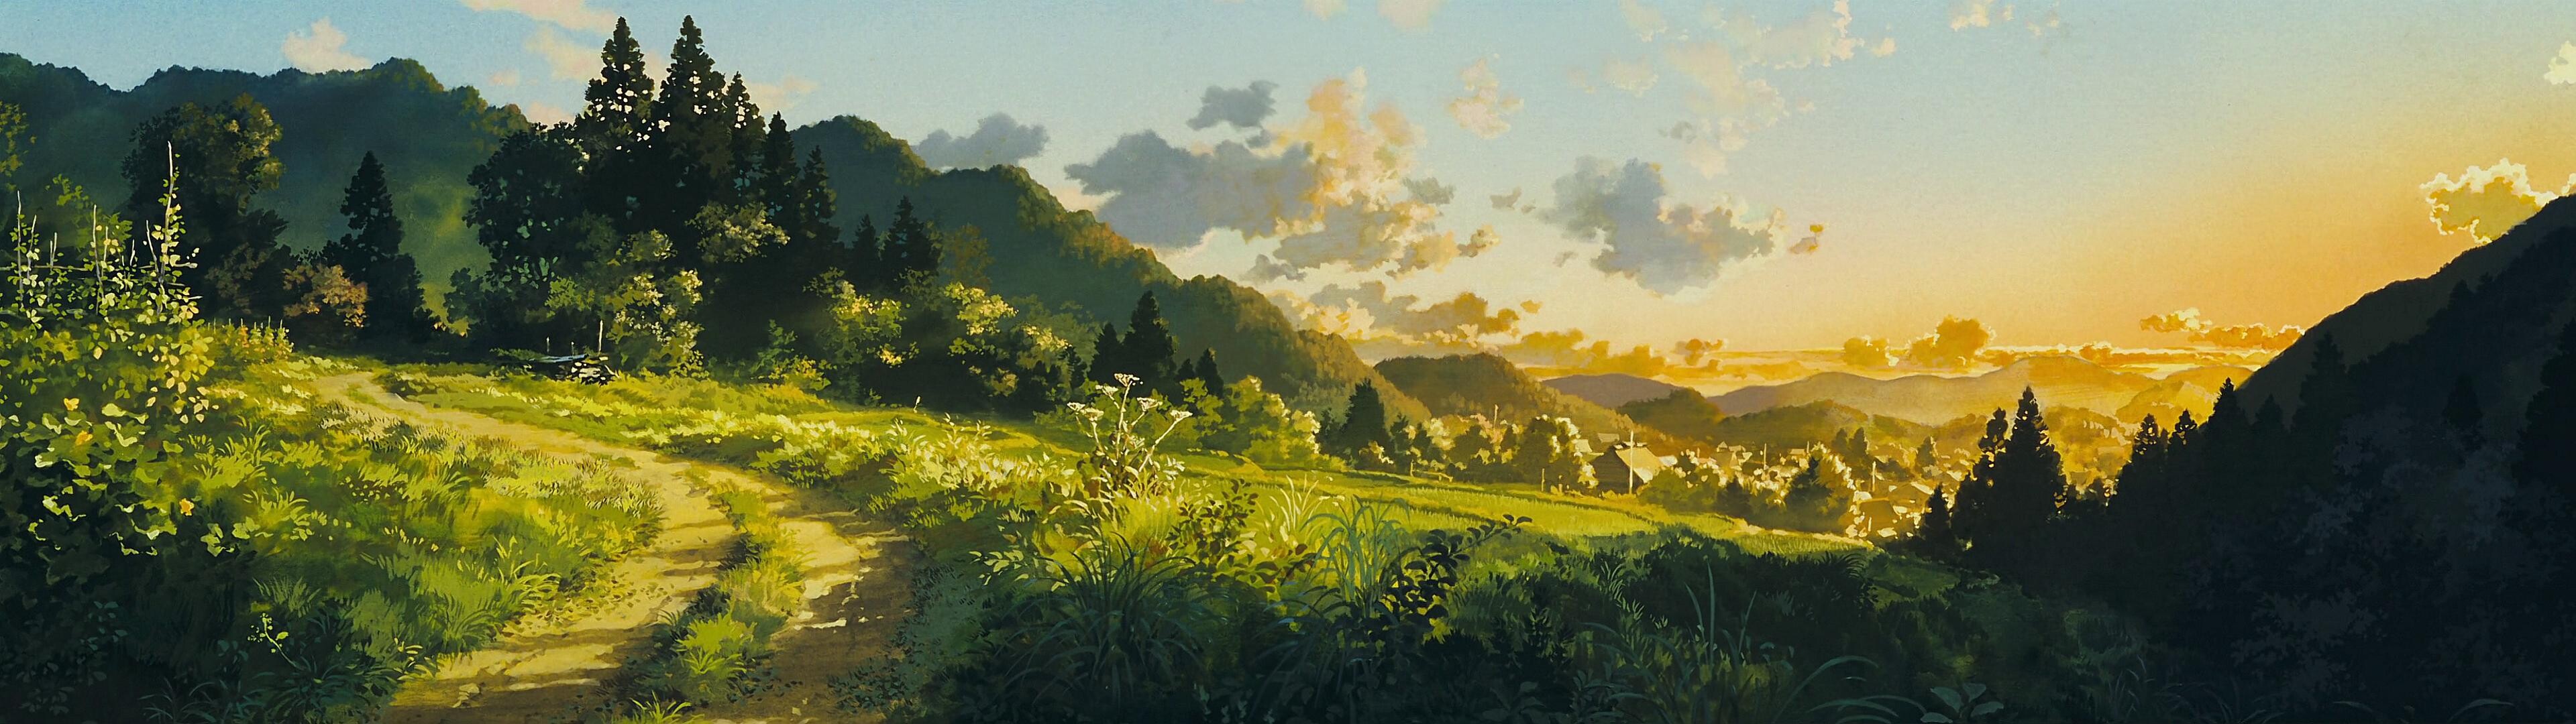 Studio Ghibli: Most famous films include "My Neighbor Totoro," "Spirited Away," and "Princess Mononoke". 3840x1080 Dual Screen Background.